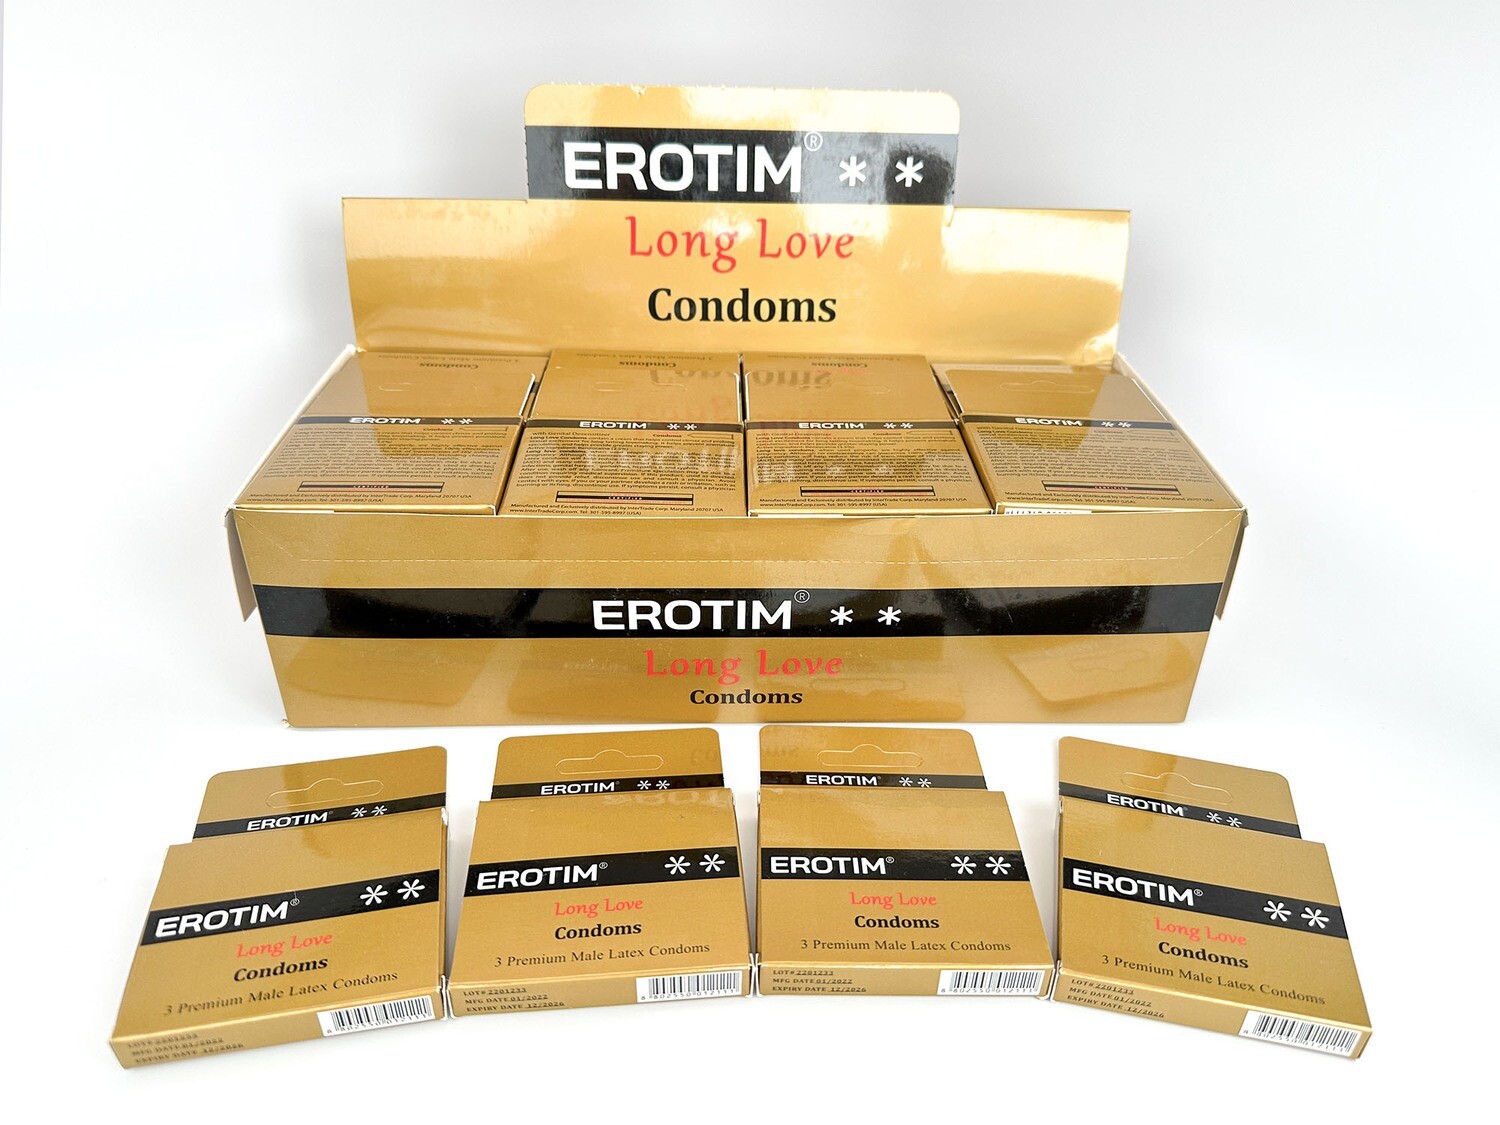 Wholesale - Long Love® Erotim® Condom Gold Packing - Lot of 1 display case (containing 144 condoms) - Total 144 condoms